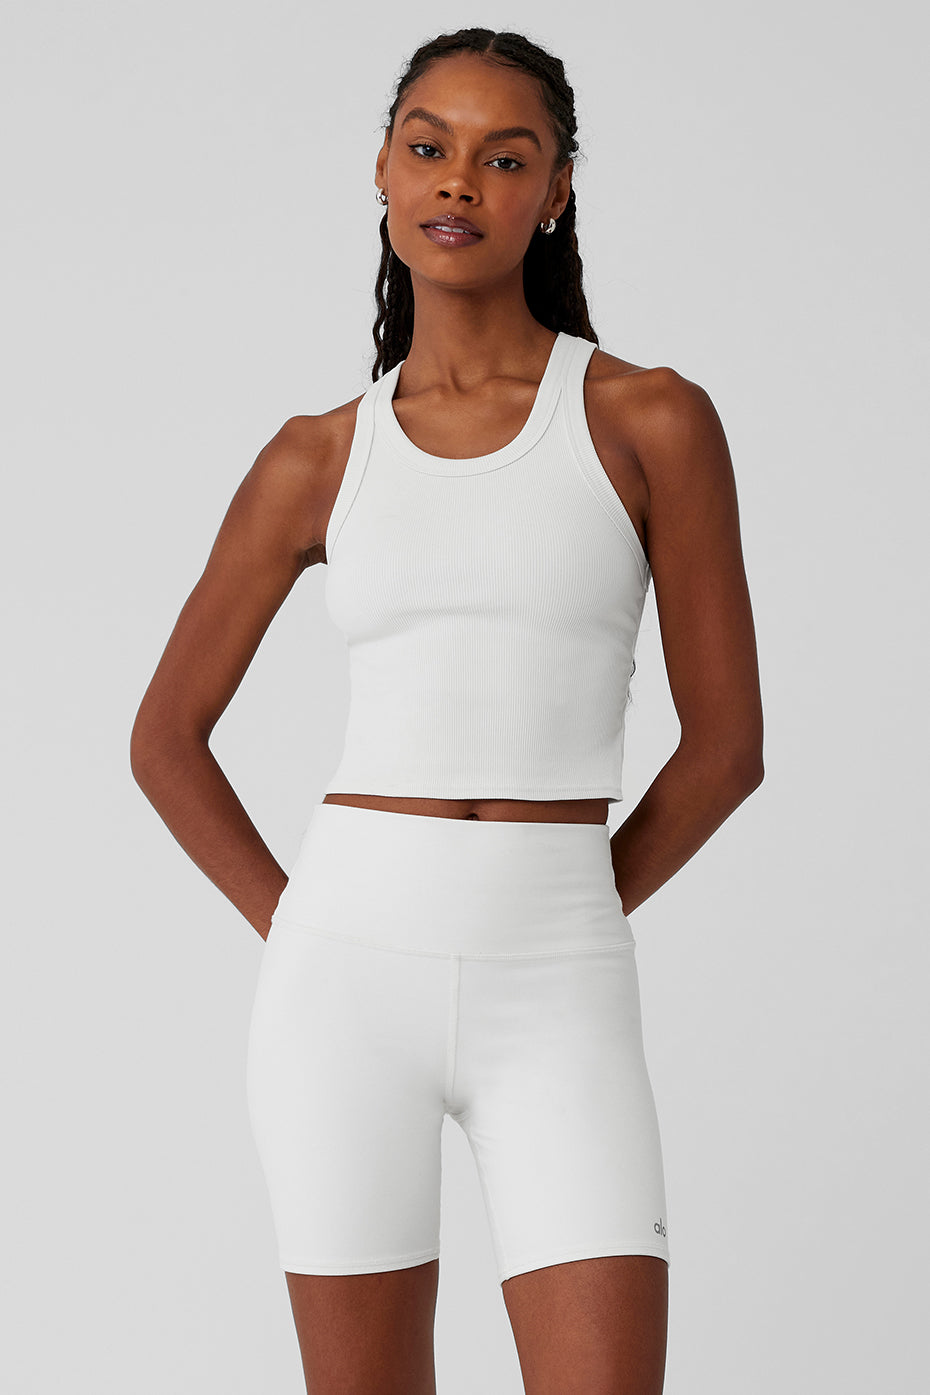 Alo Yoga womensW9032RRib Support Tank sleeveless Shirt - white - X-Small :  : Fashion